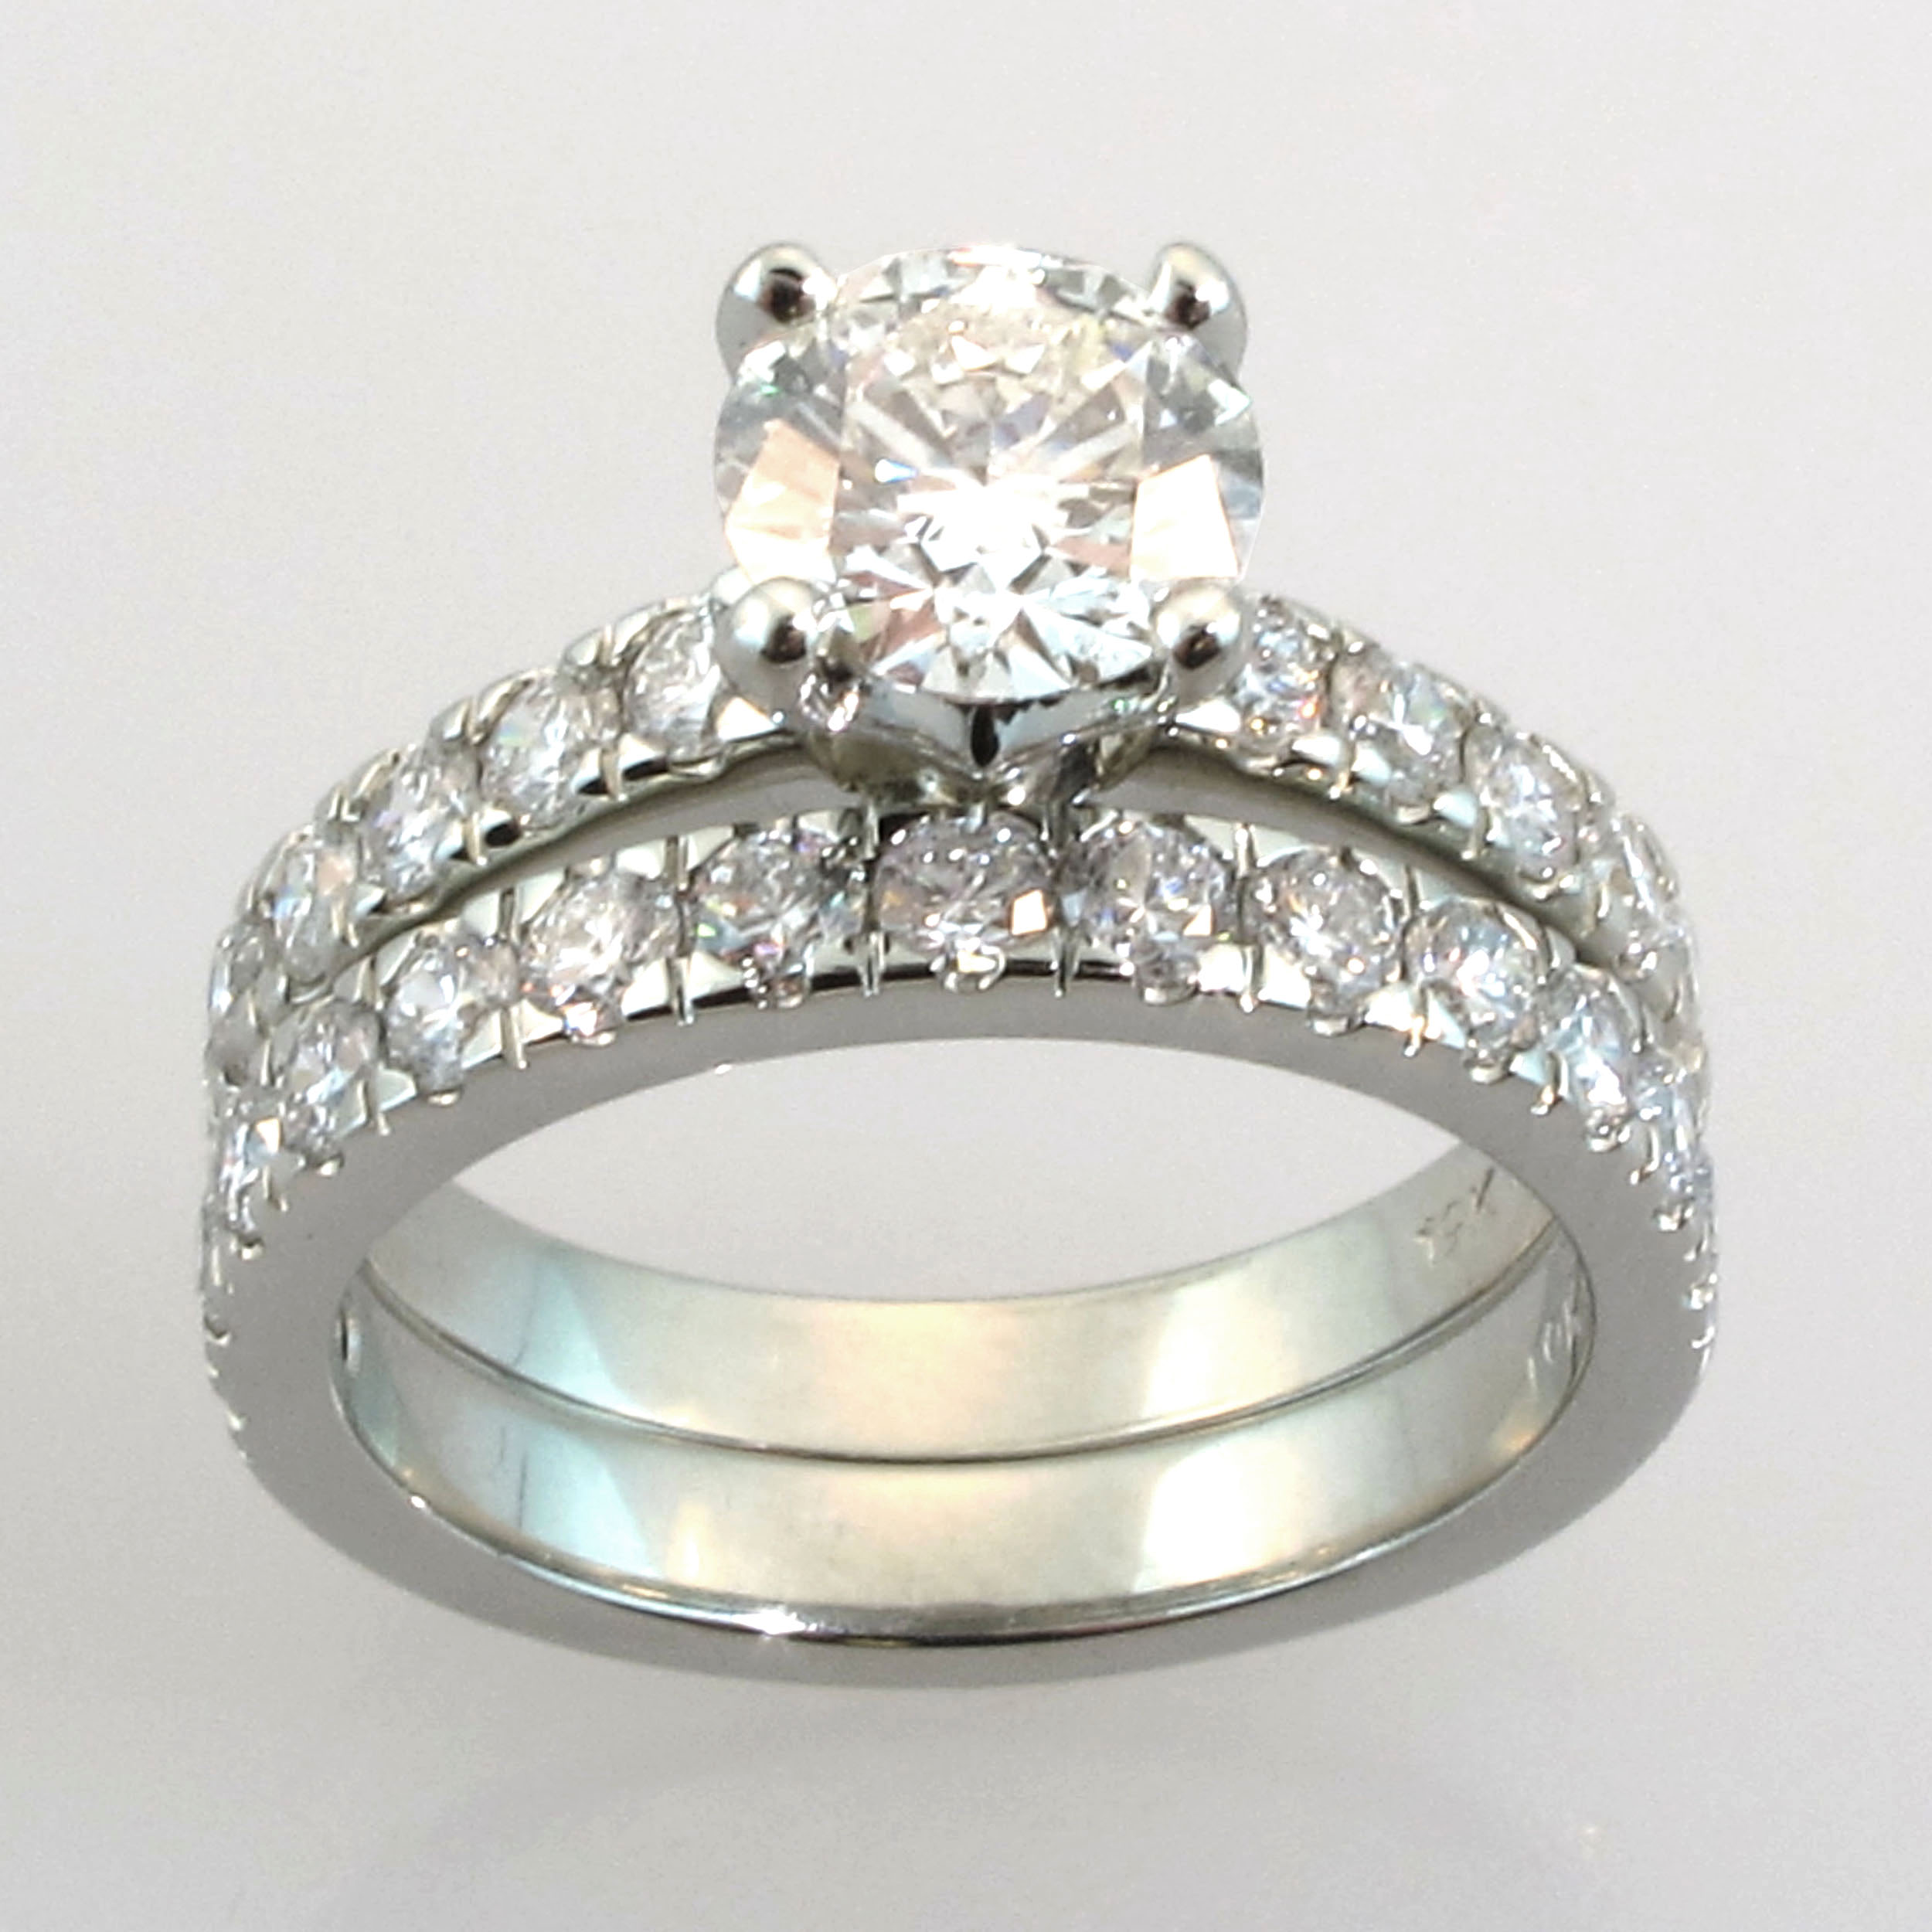 Brilliant-cut diamond engagement ring with matching wedding band wedding ring